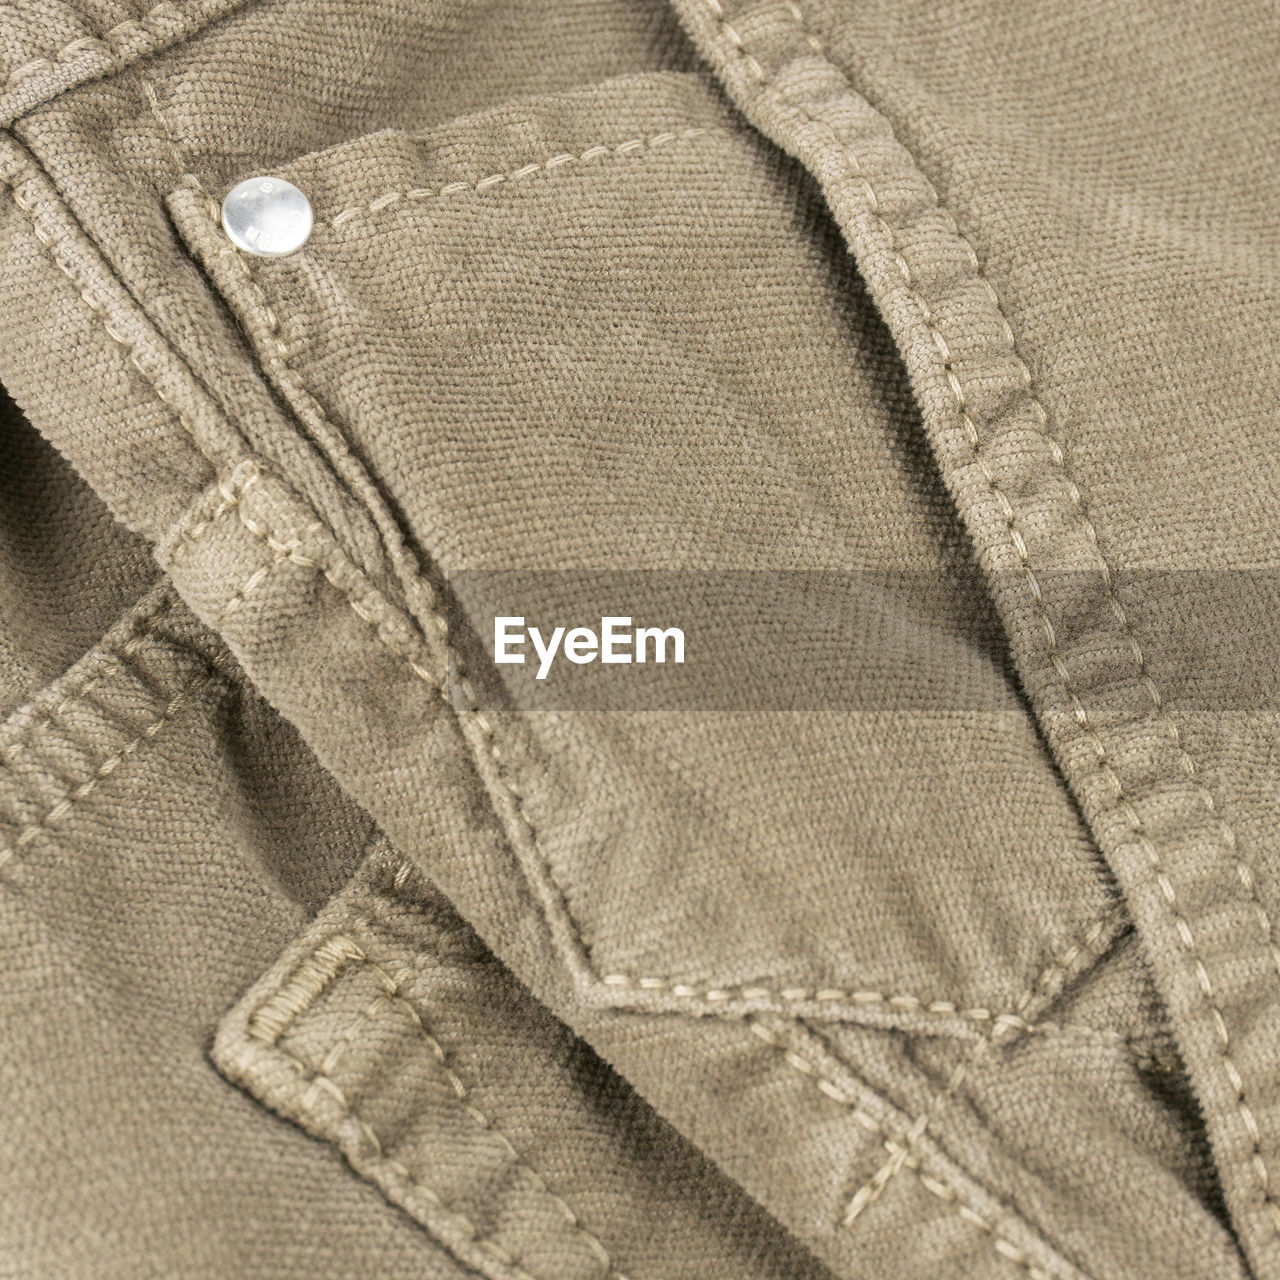 Beige mens velour pants pocket detail close up